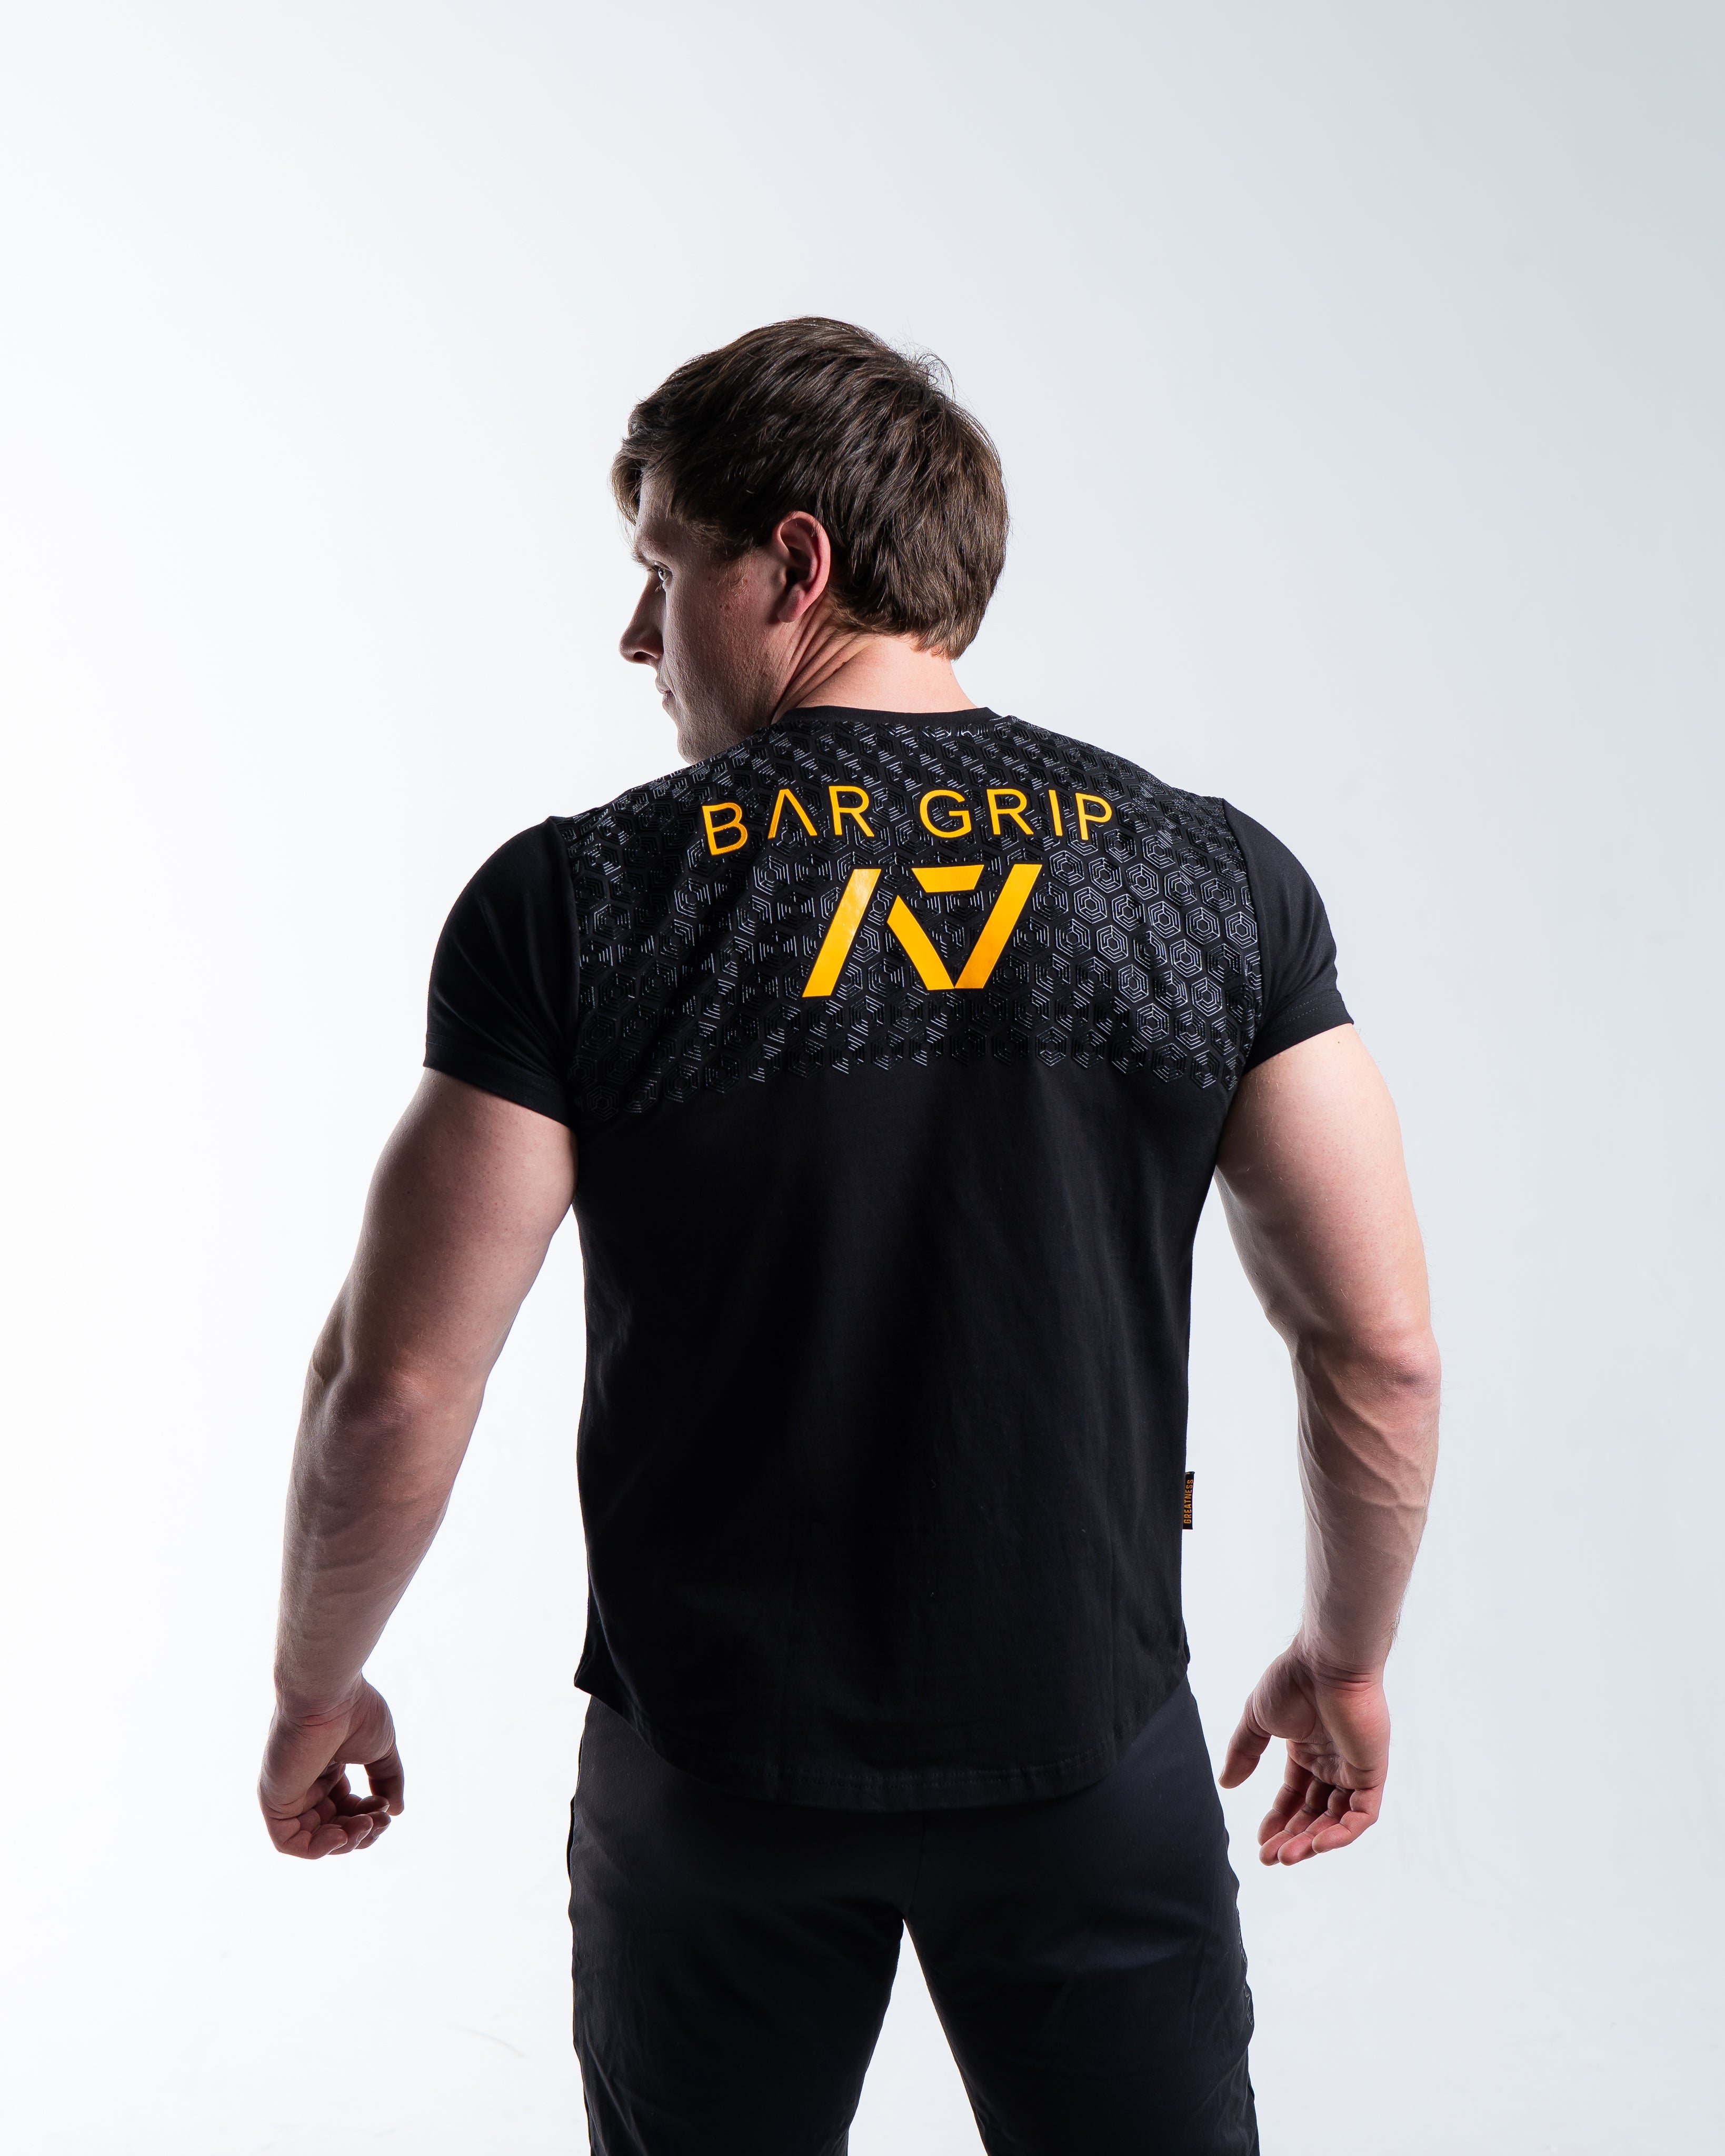 MEN'S TOPS Men's Bar Grip T-shirts, Tanks & Hoodies | A7 Europe 